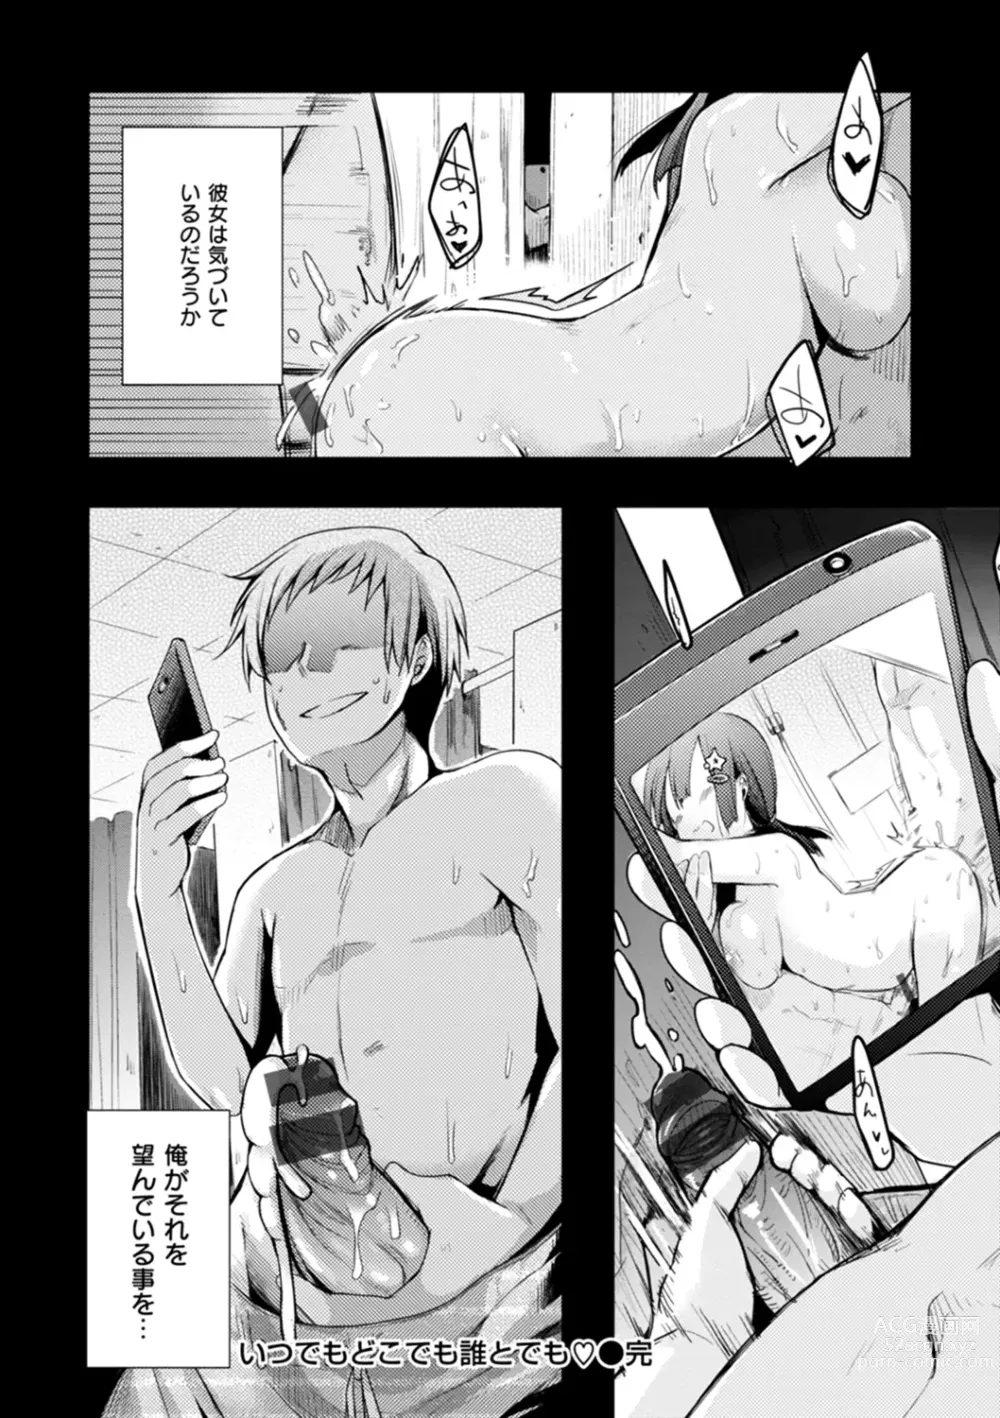 Page 192 of manga Kanojo no Jijou - Her Circumstances